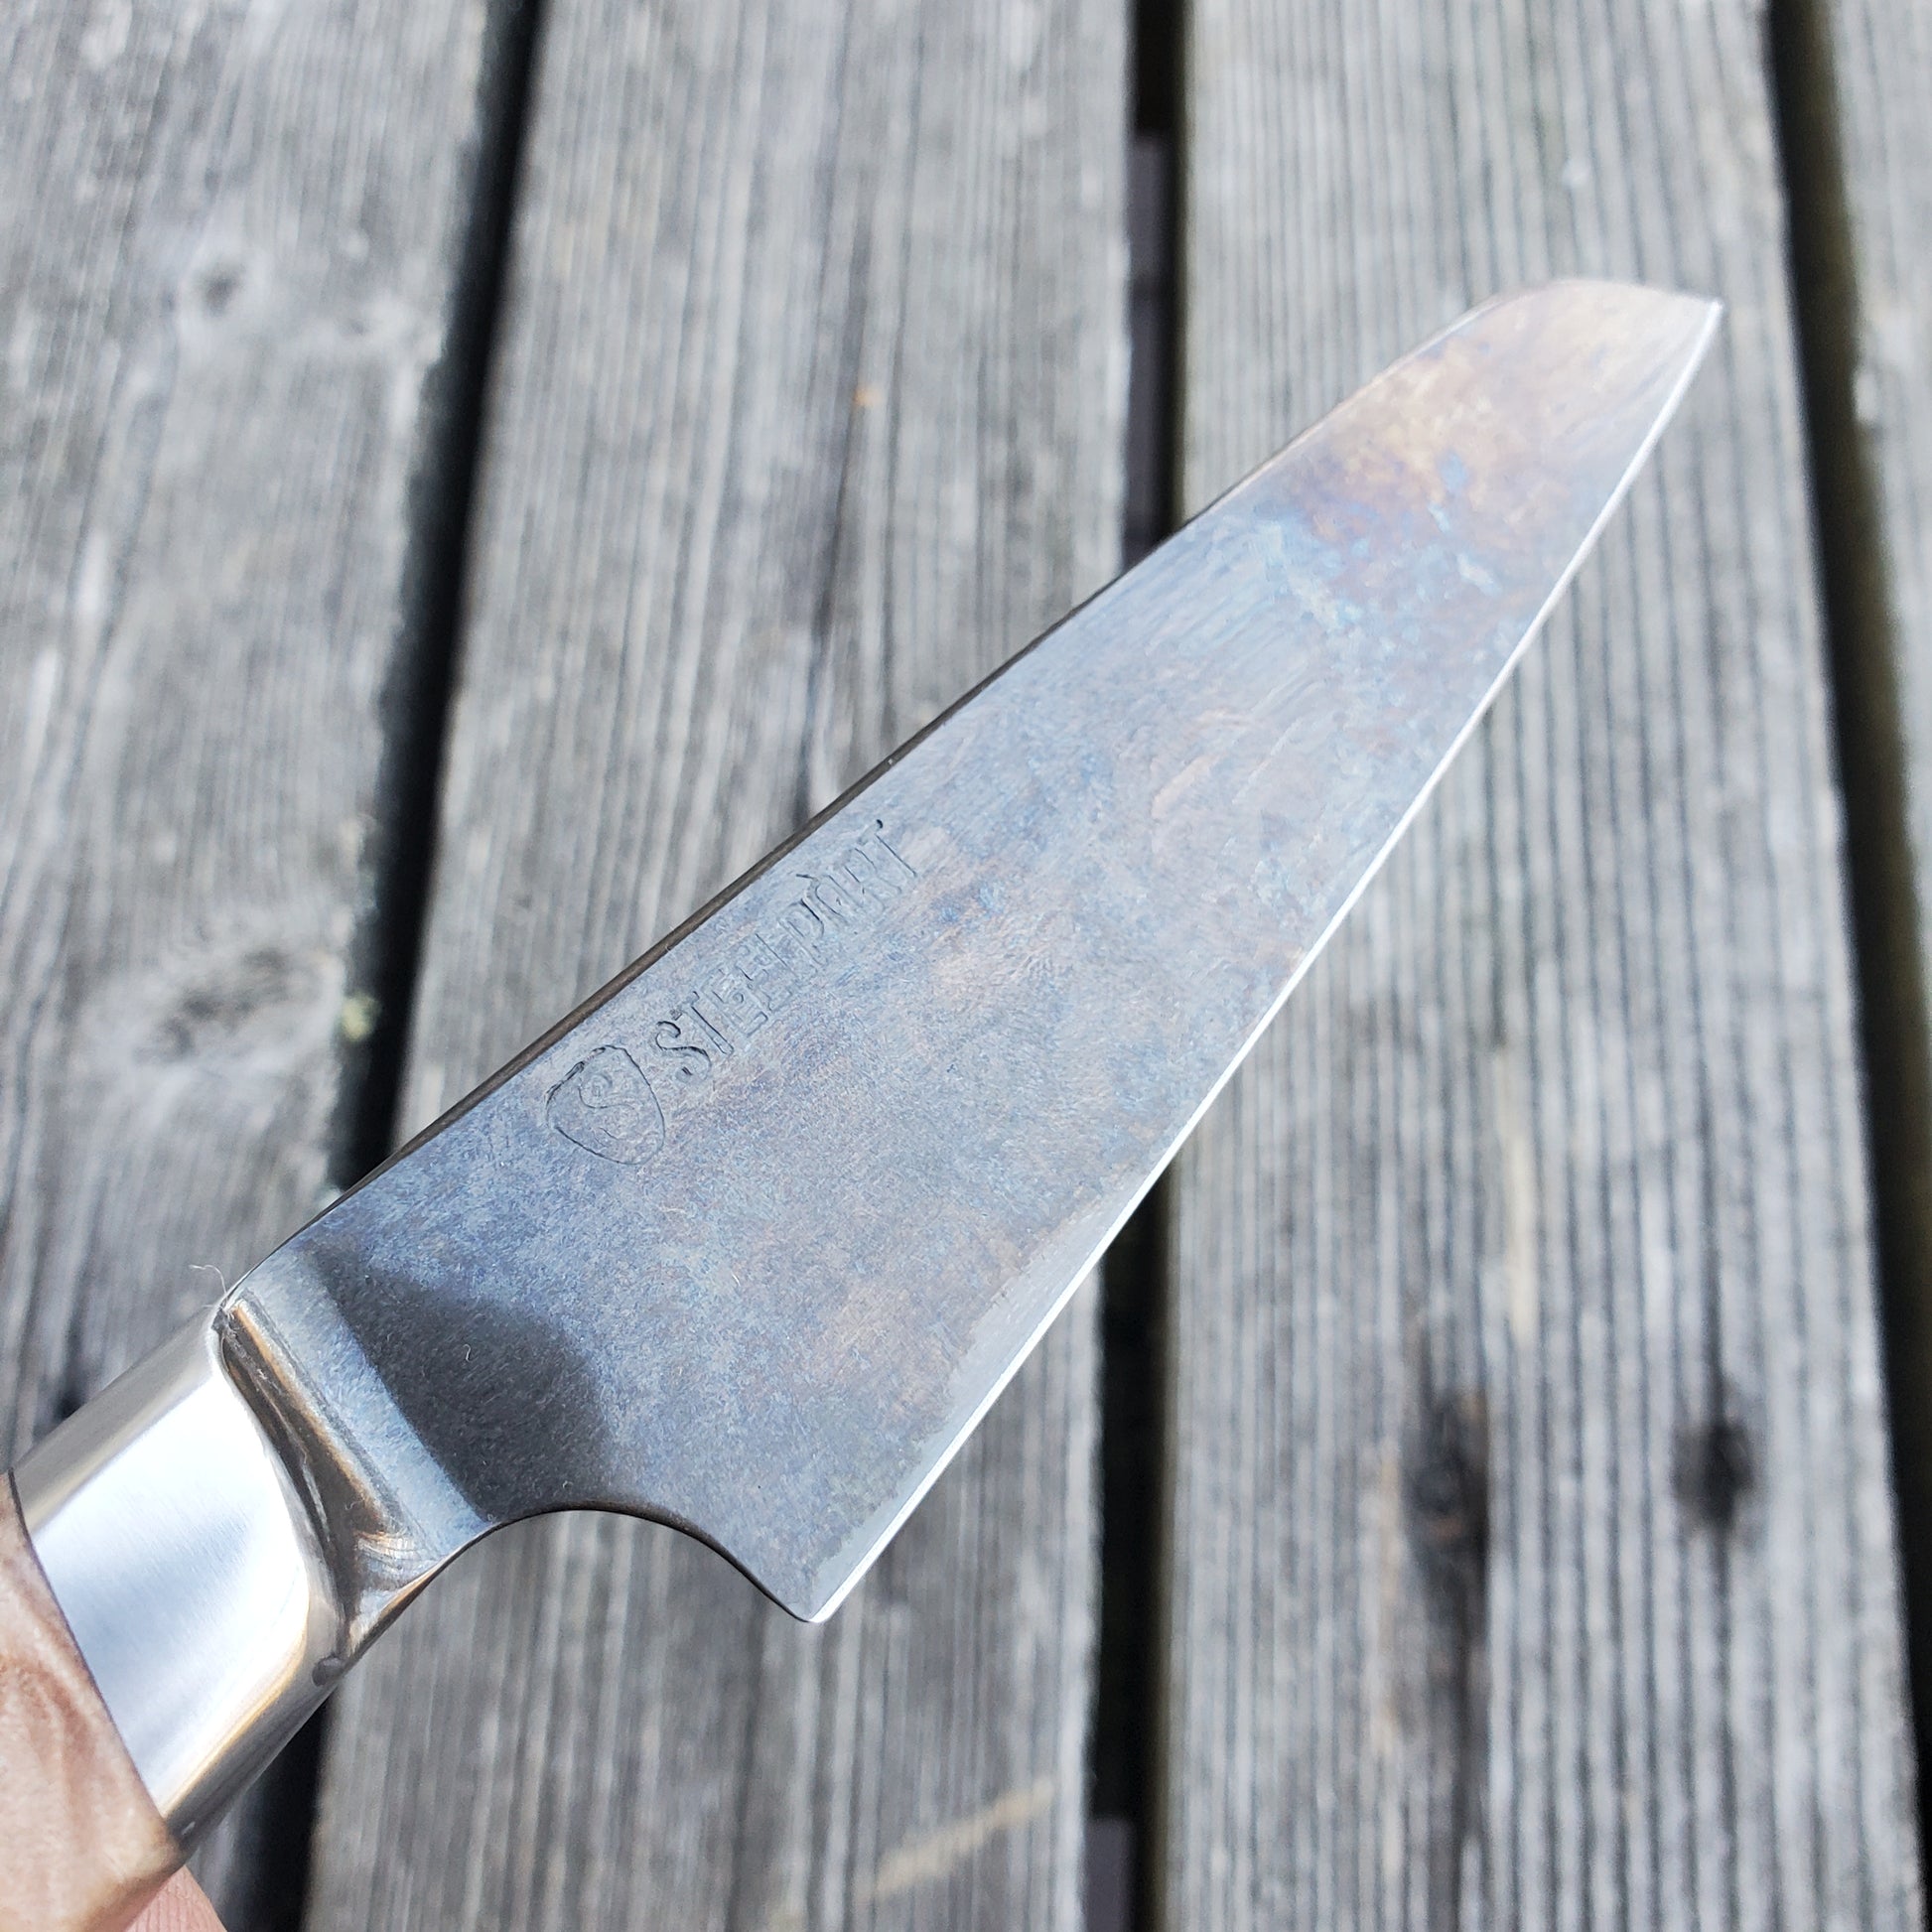 Steelport: 8 Chef Knife - 52100 - Differential Heat Treat - Big Leaf Maple  Burl